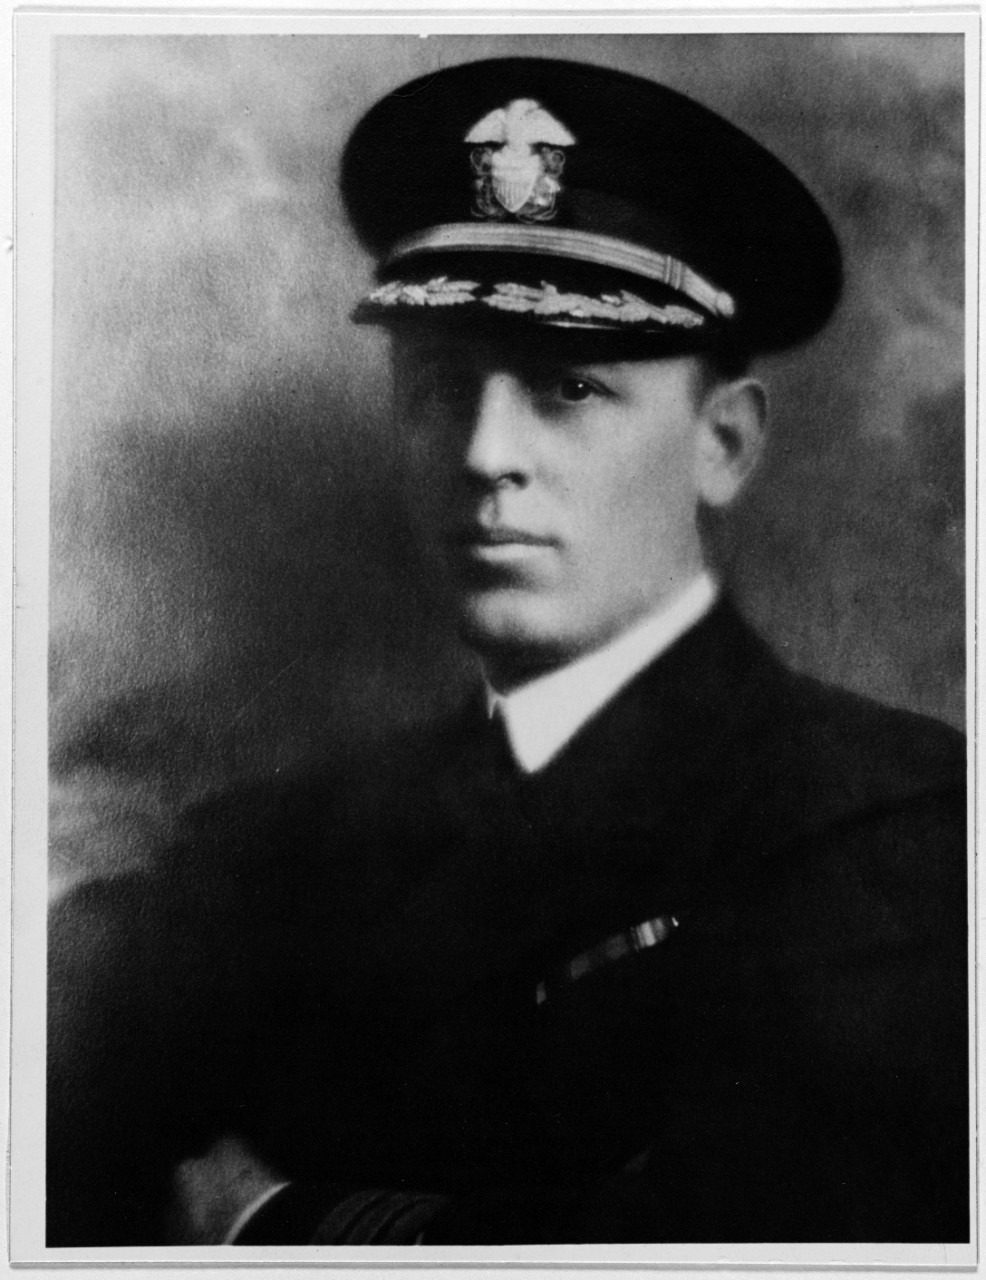 Captain Mark L. Hersey, USN